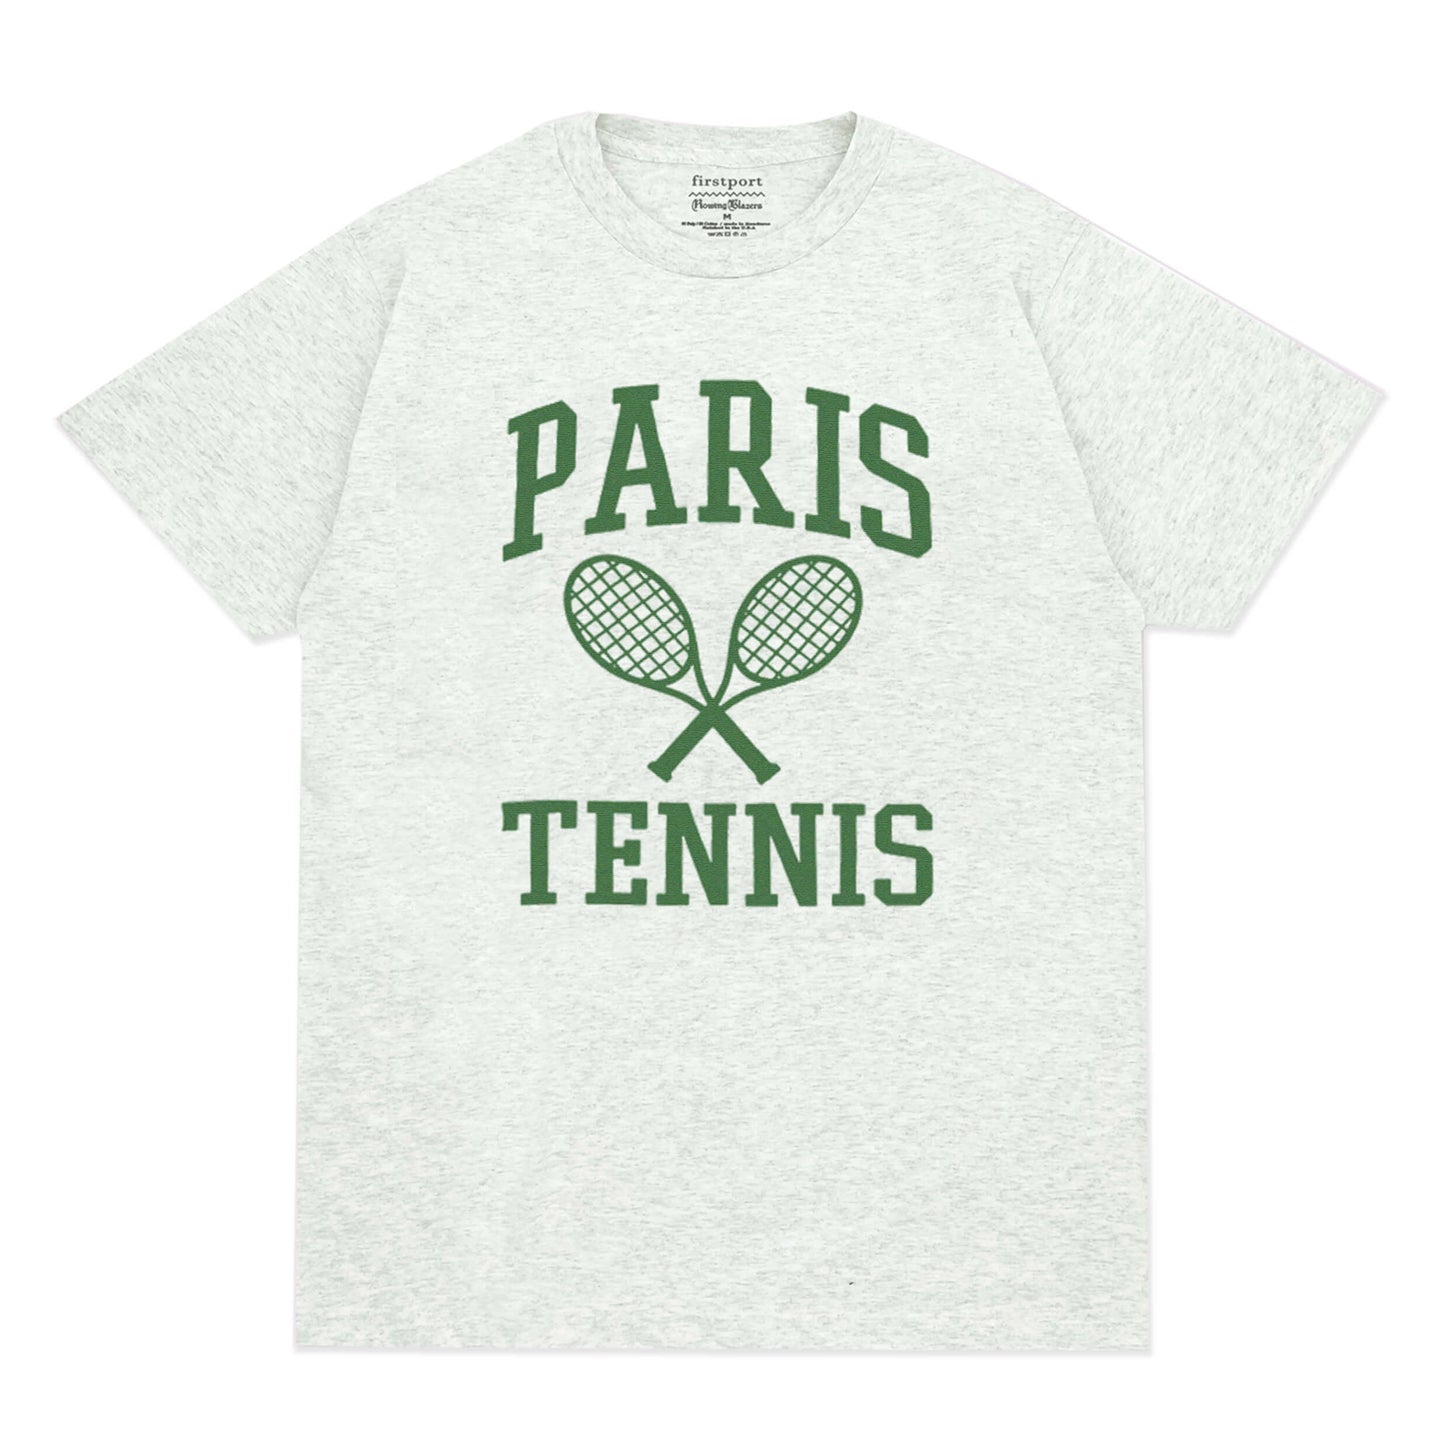 Paris Tennis Tee